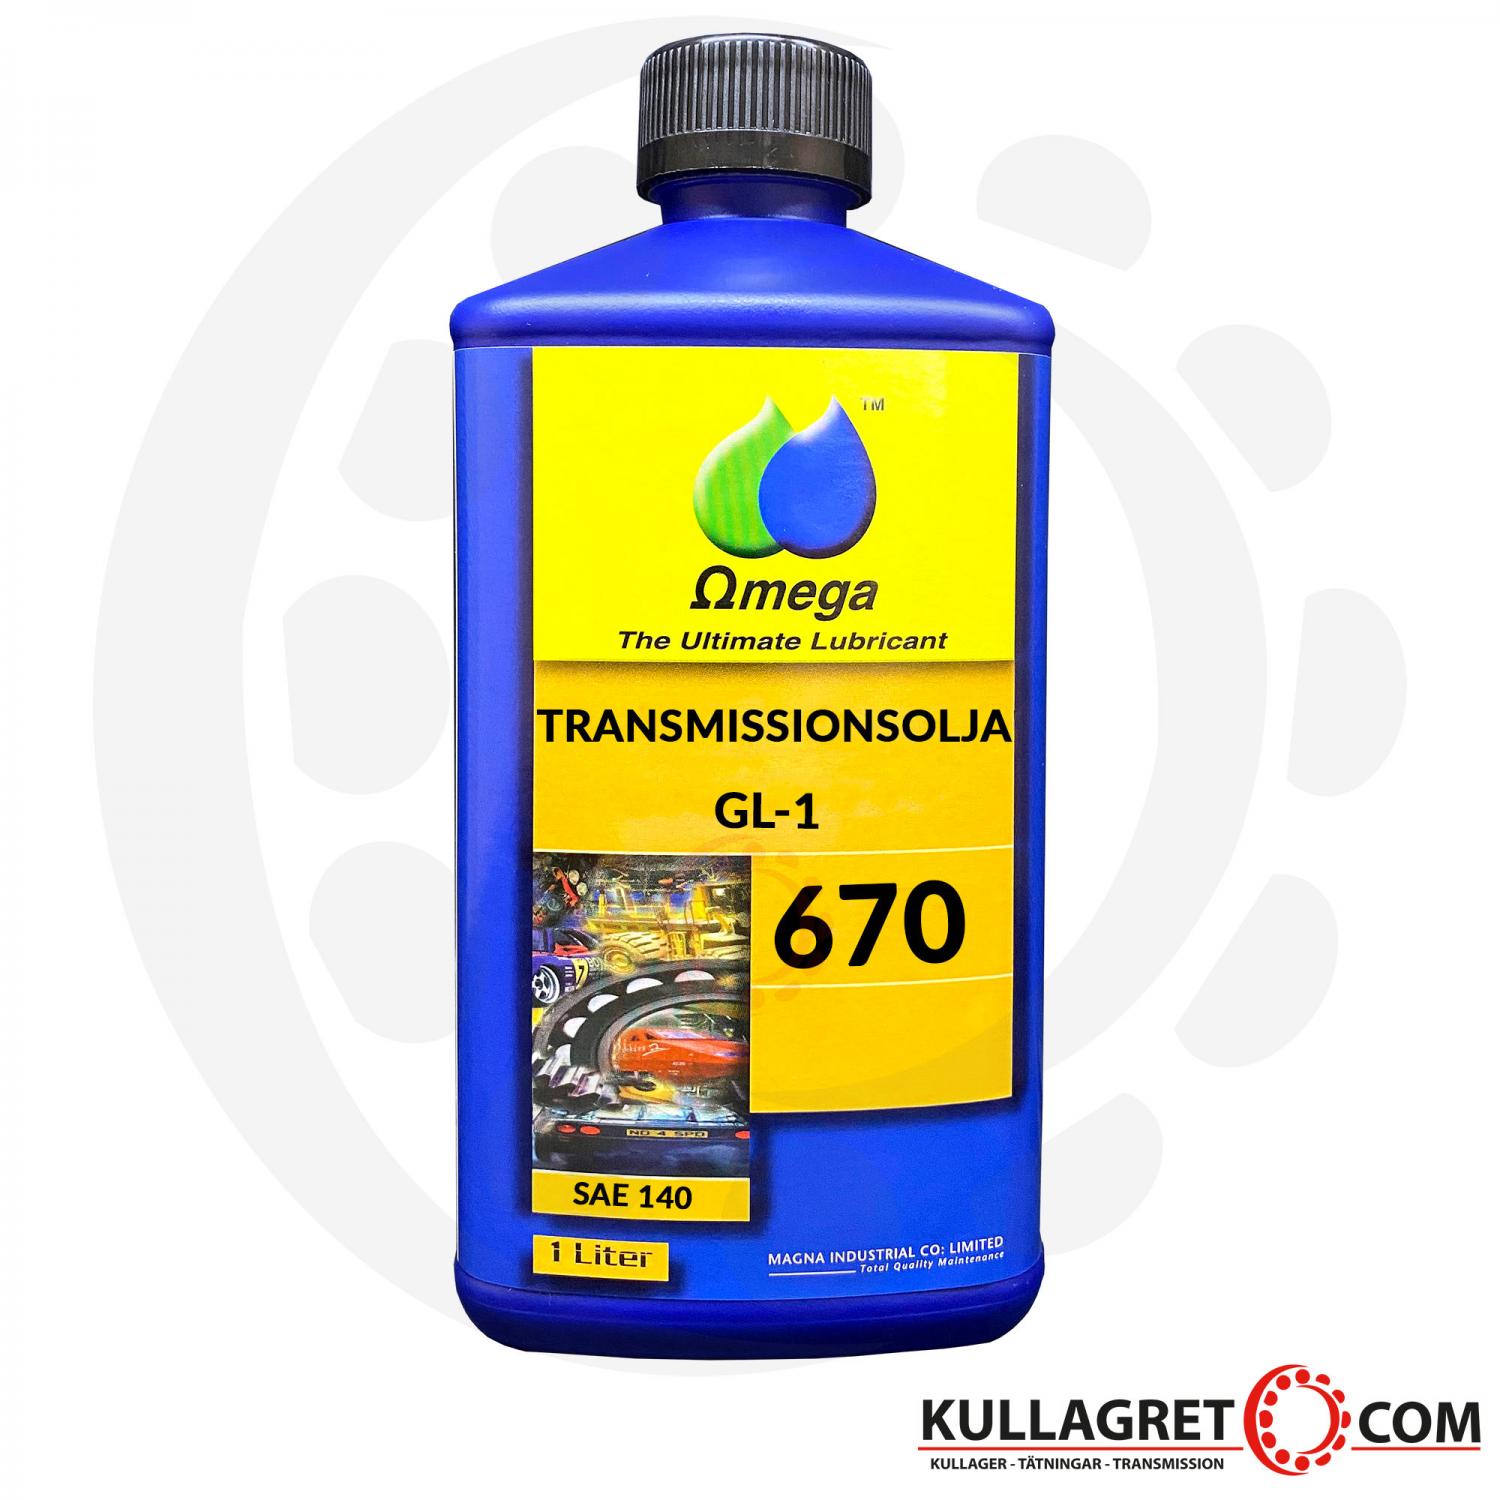 Omega 670 SAE 140 GL-1 Transmissionsolja 1L